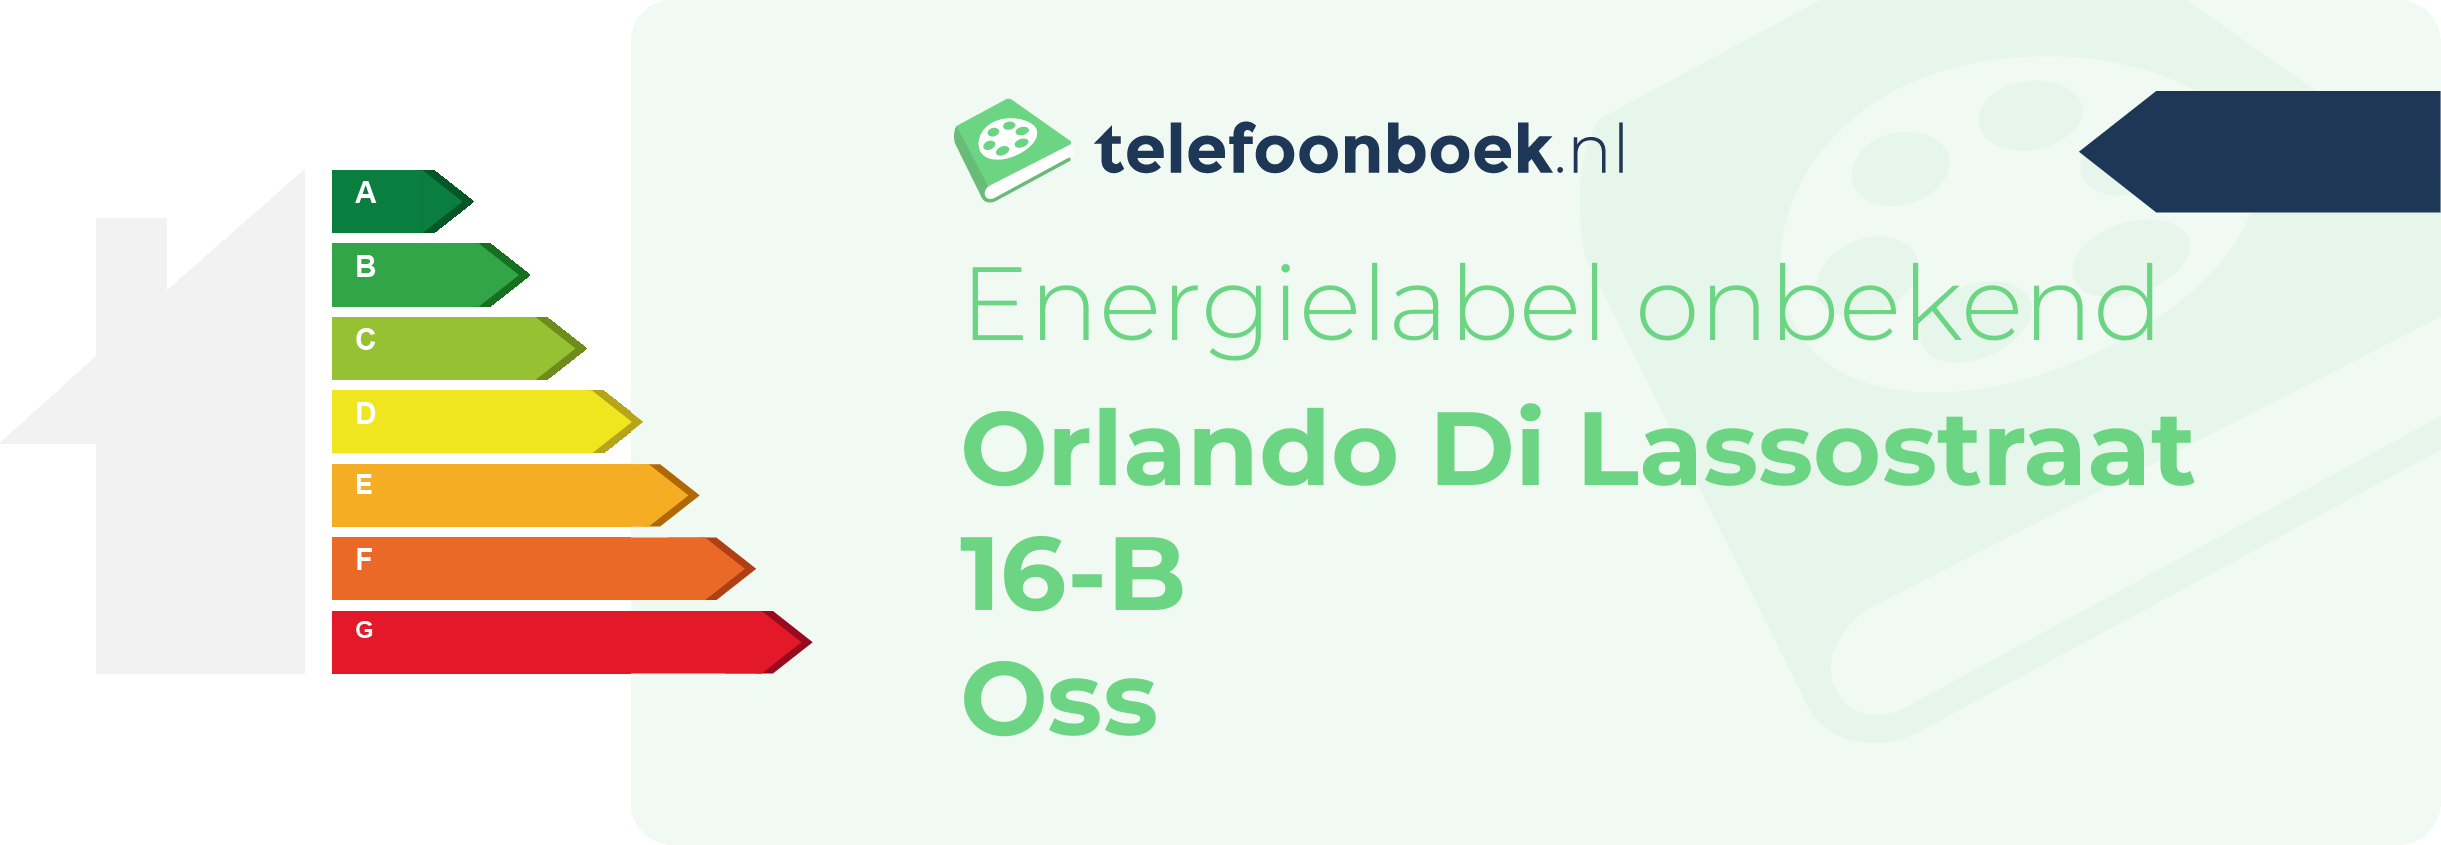 Energielabel Orlando Di Lassostraat 16-B Oss